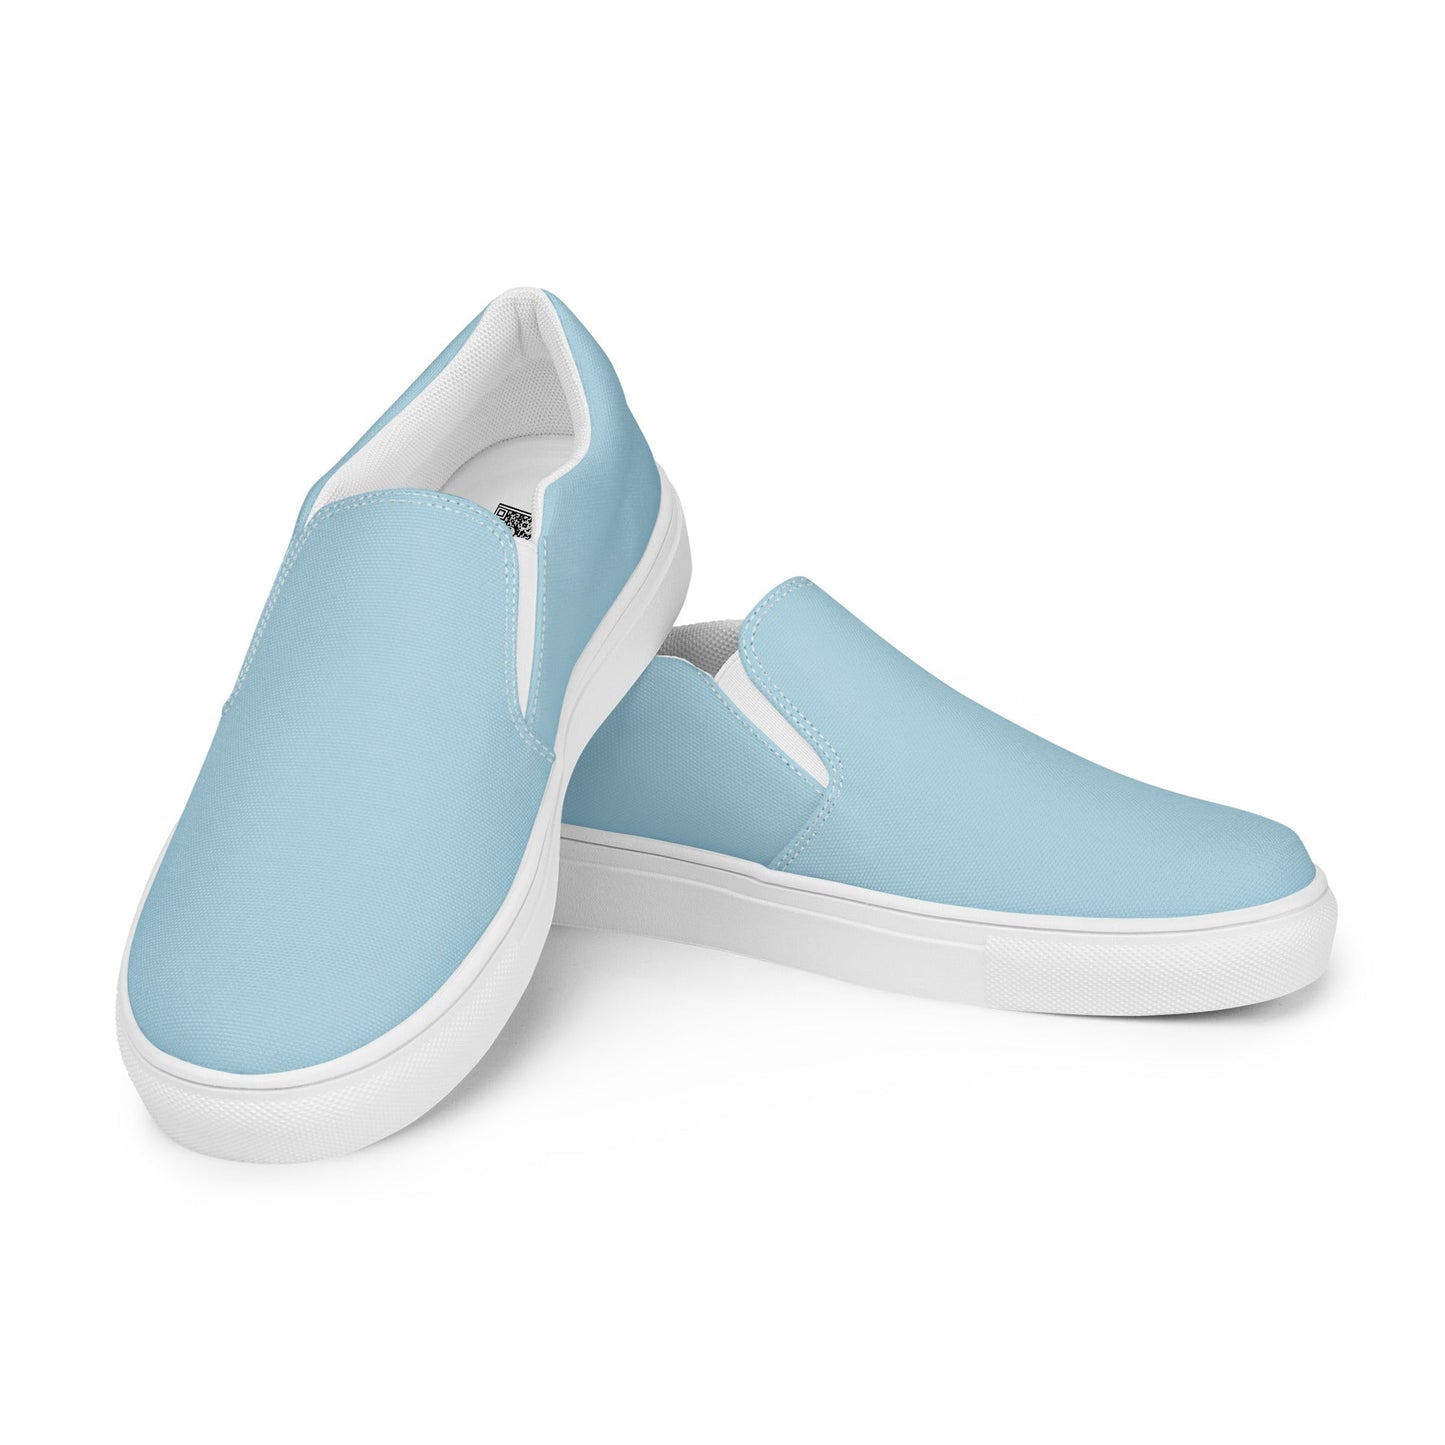 klasneakers Women’s slip-on canvas shoes - Sky Blue